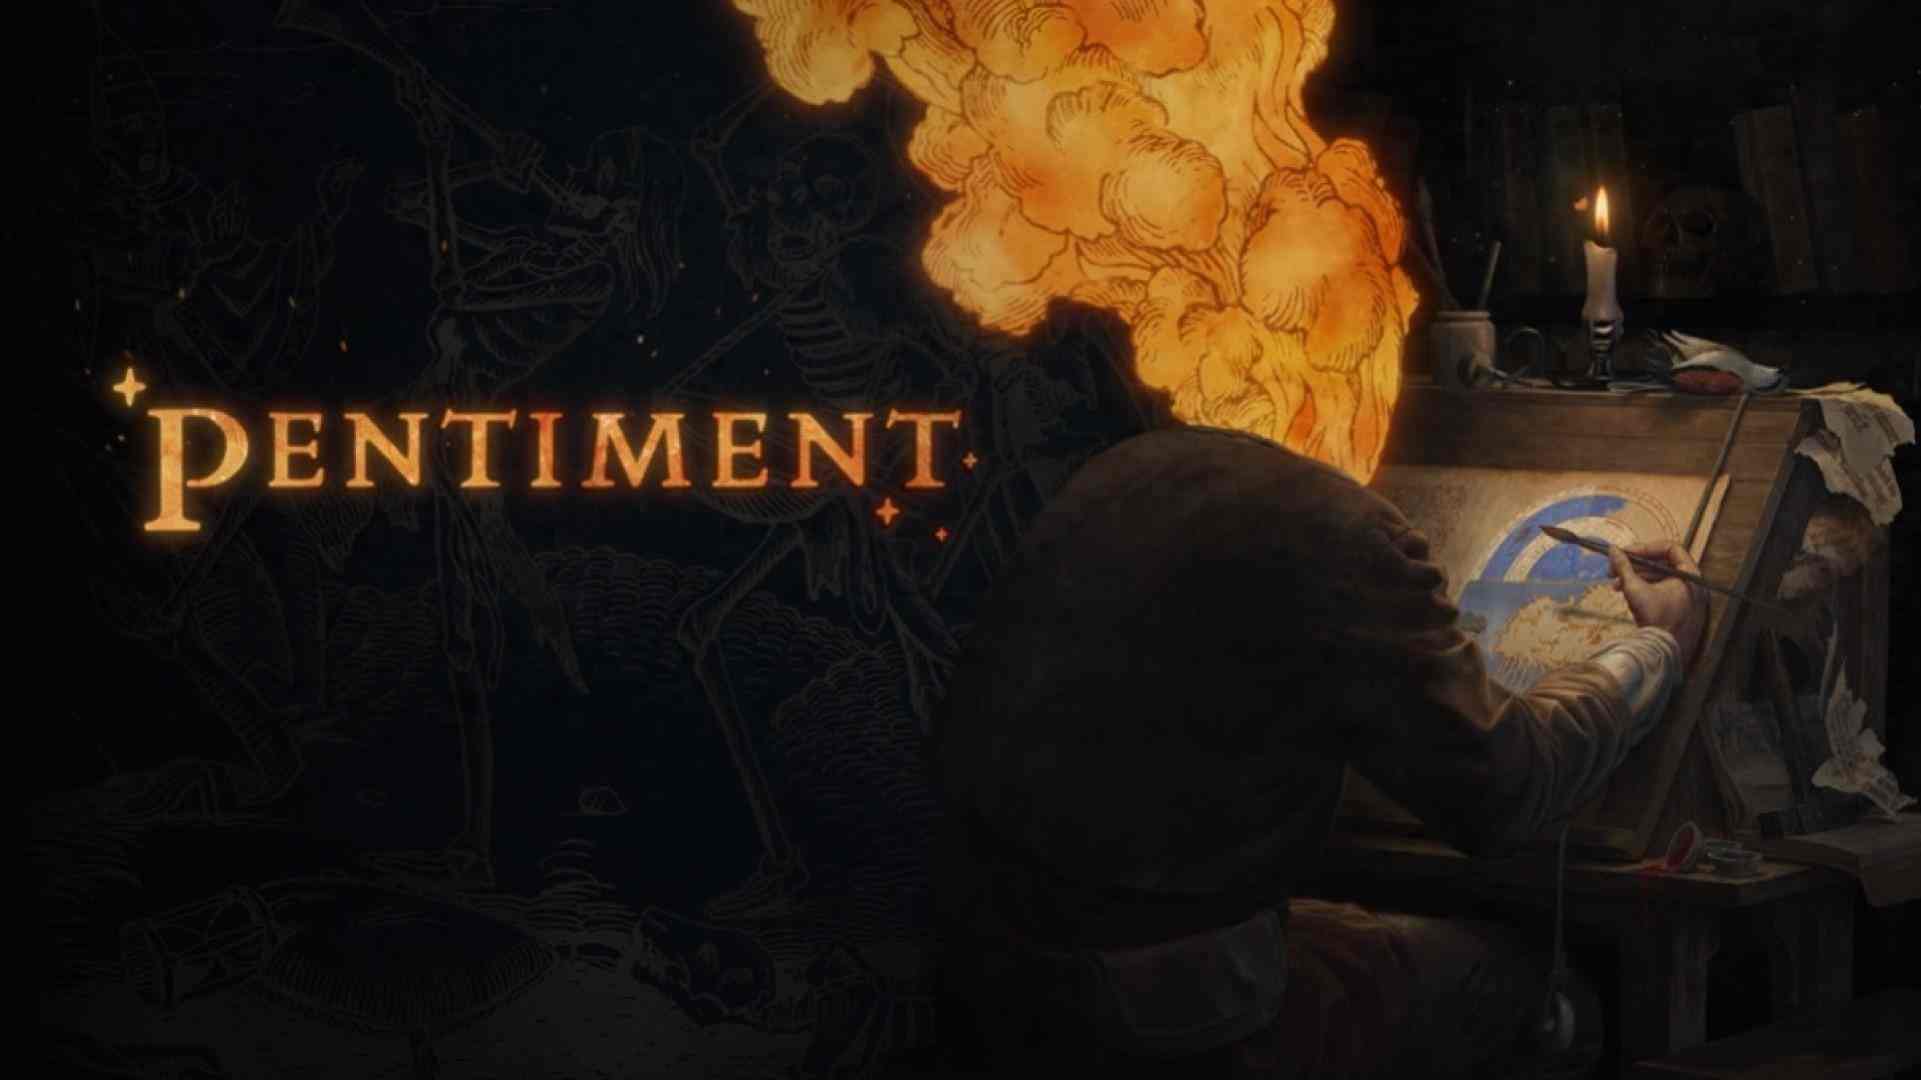 消息称满分游戏《Pentiment》将登陆PS5和Switch